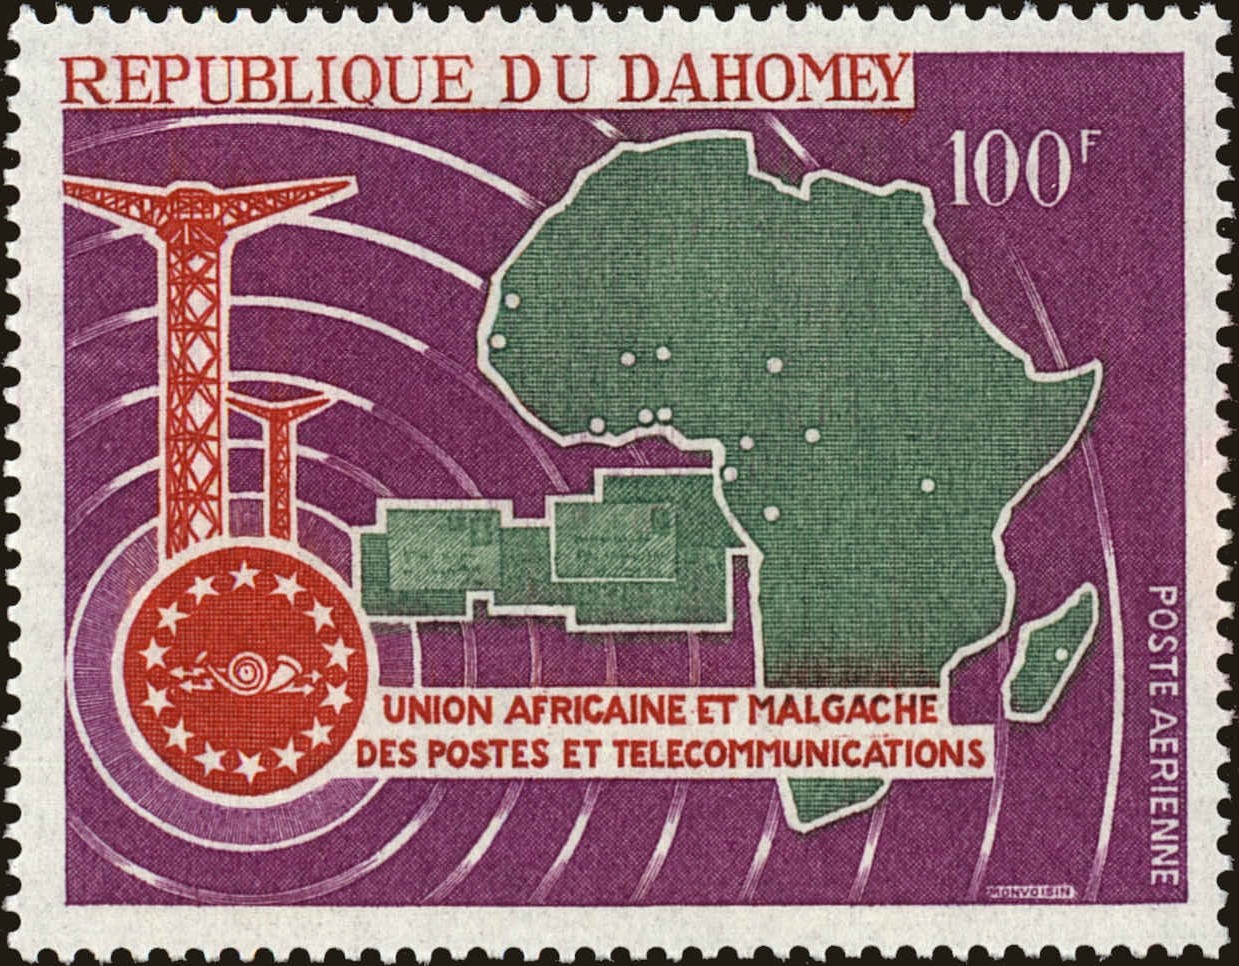 Front view of Dahomey C61 collectors stamp